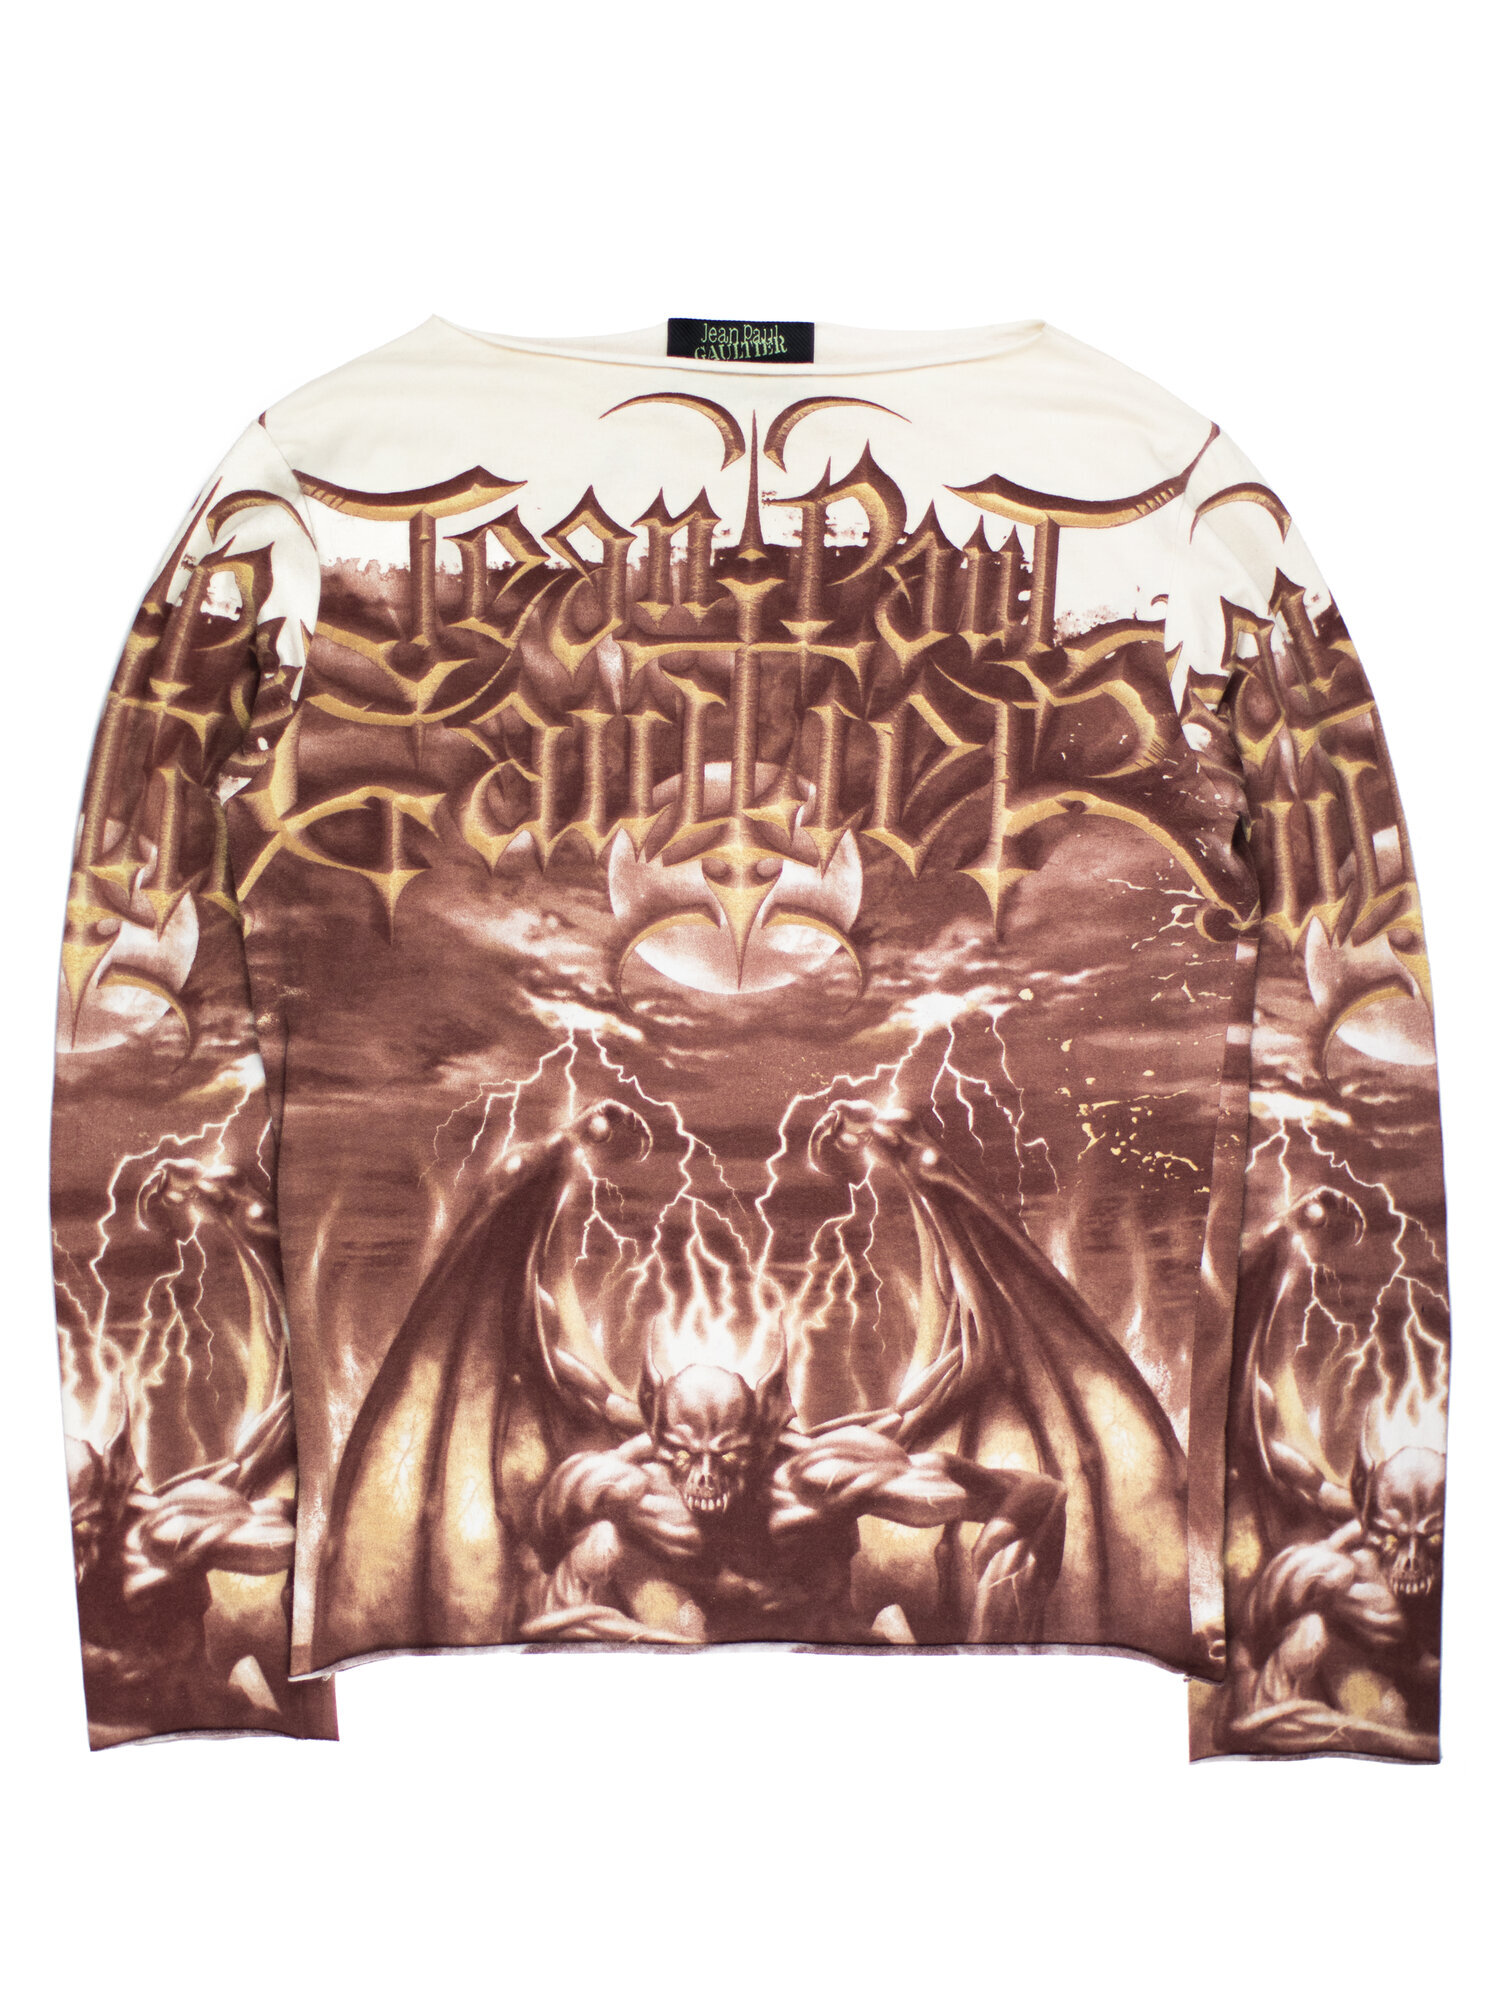 Jean Paul Gaultier SS2001 Maille Homme Satan Shirt — Middleman Store